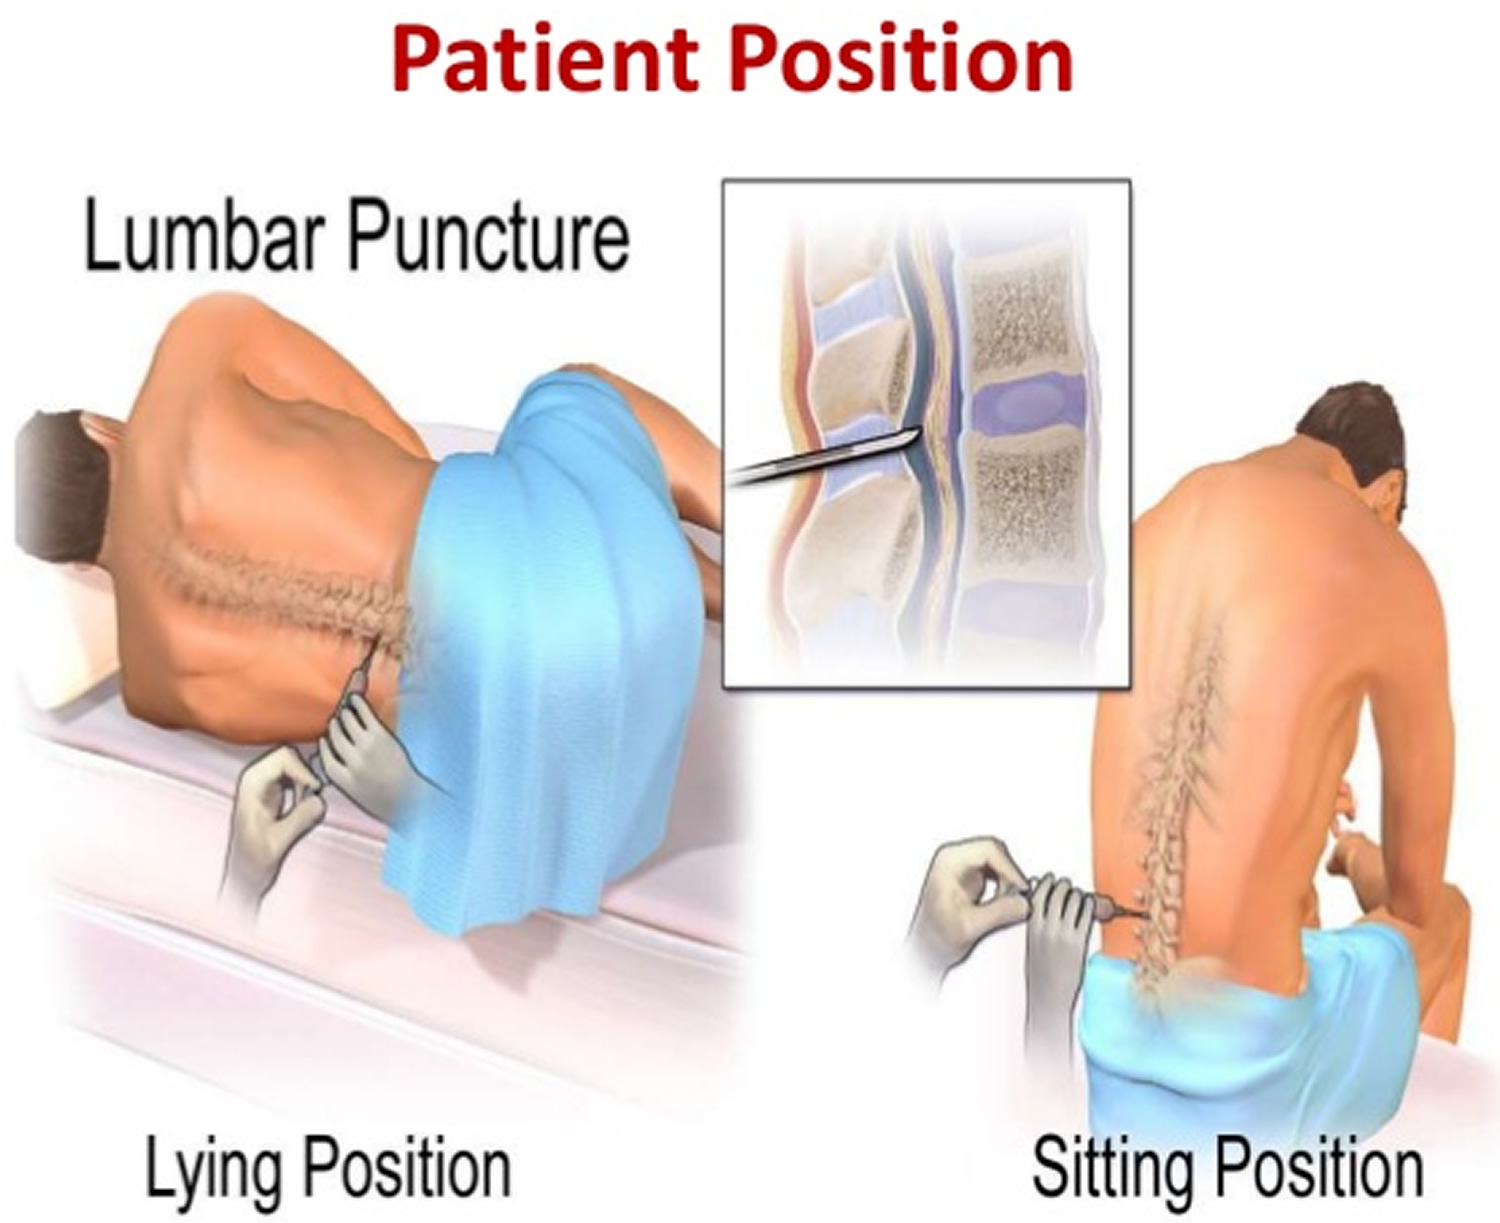 Lumbar Puncture Position 